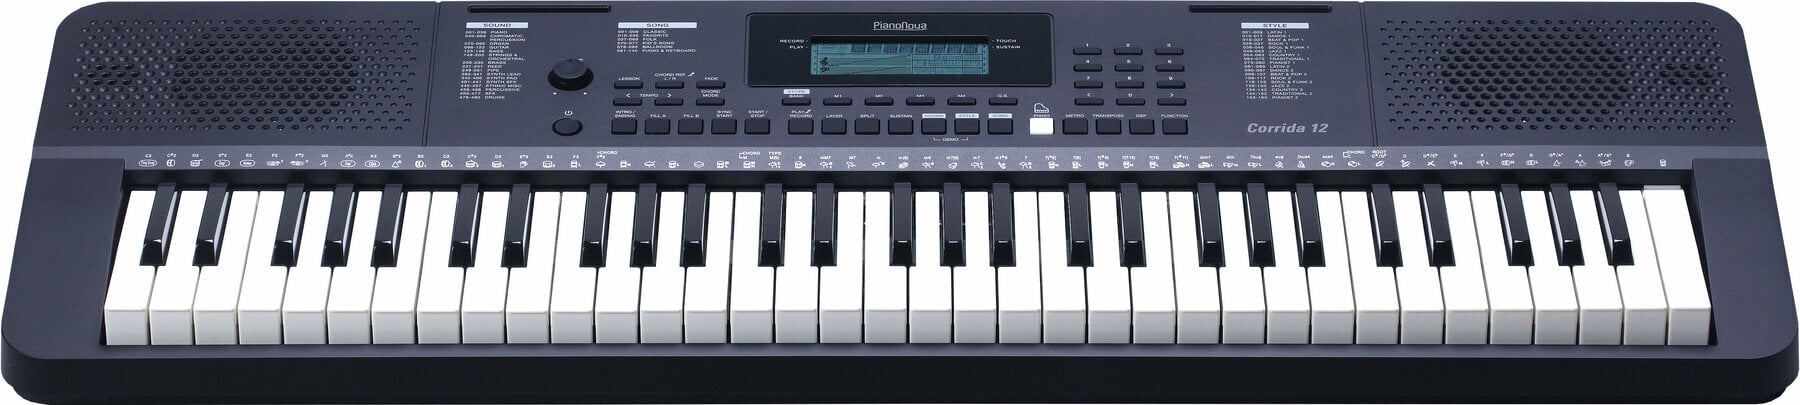 Keyboard z dinamiko Pianonova Corrida 12